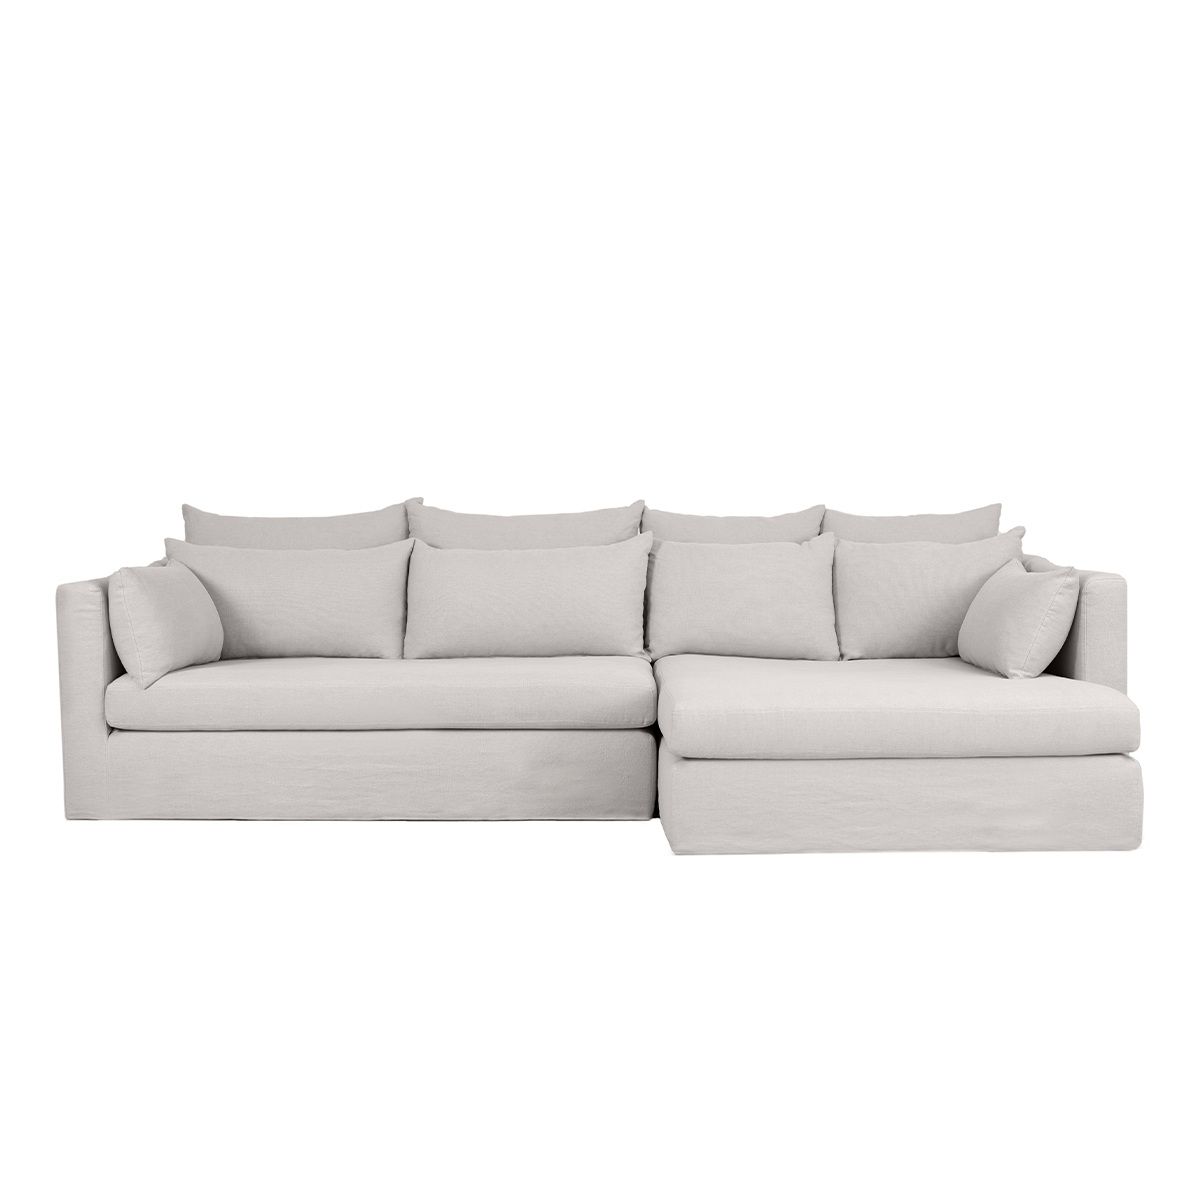 SuperBox corner sofa - Right angle, Various Sizes - Linen - image 1